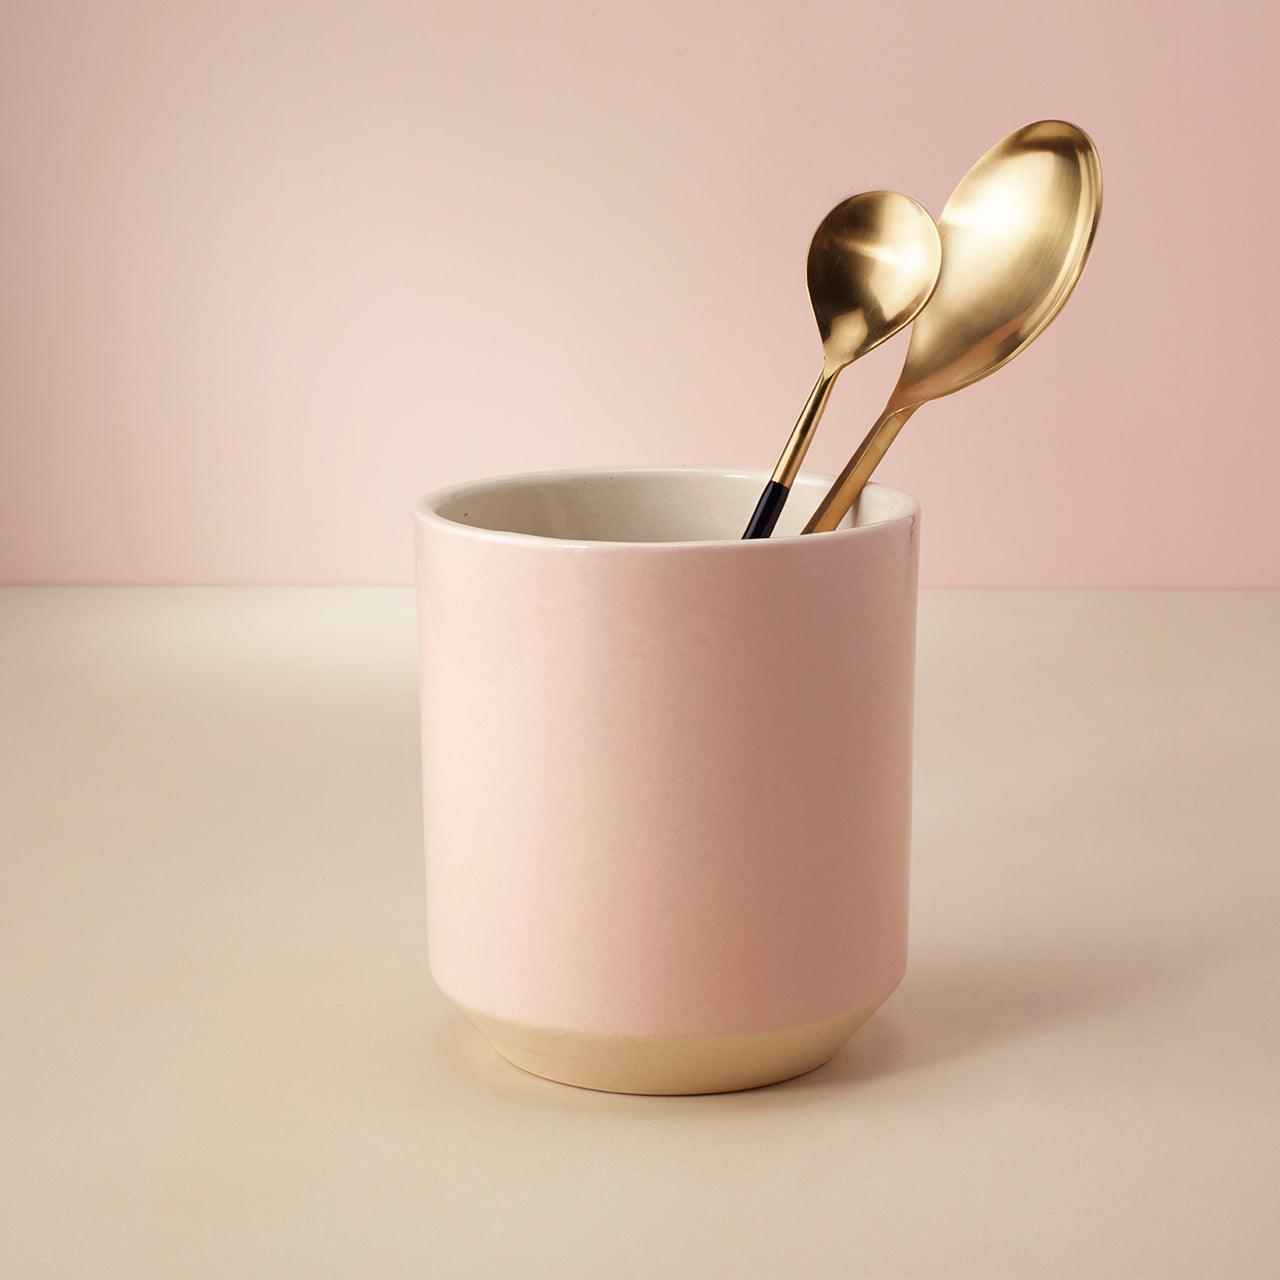 peach life ceramic utensil holder